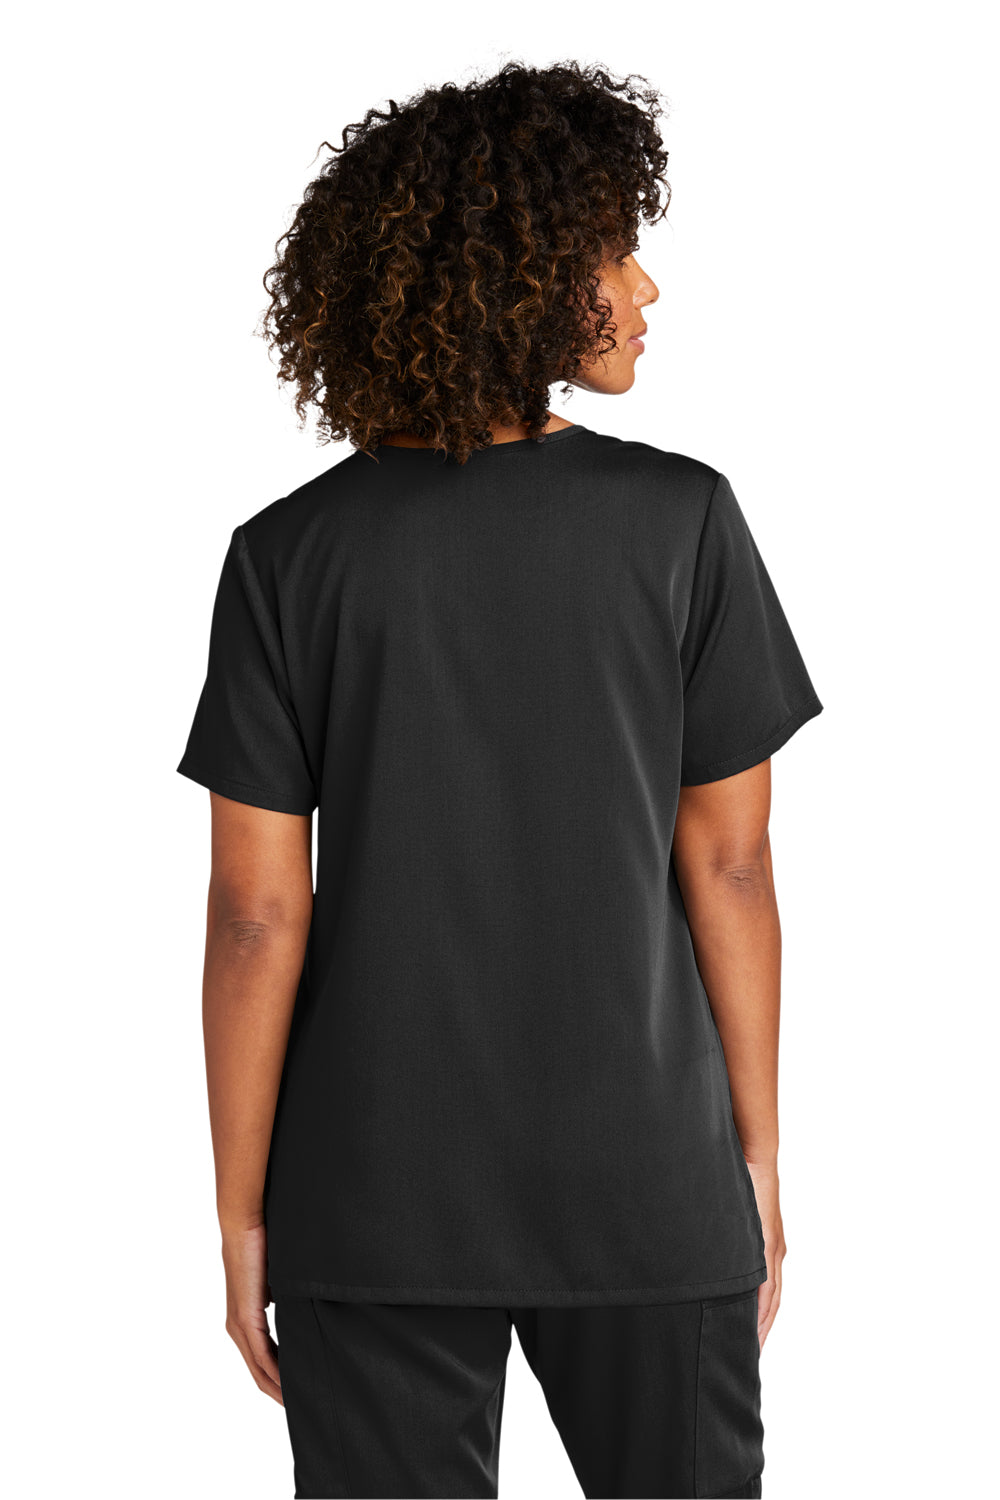 Wonderwink WW4168 Premiere Flex Short Sleeve V-Neck Shirt w/ Pockets Black Back